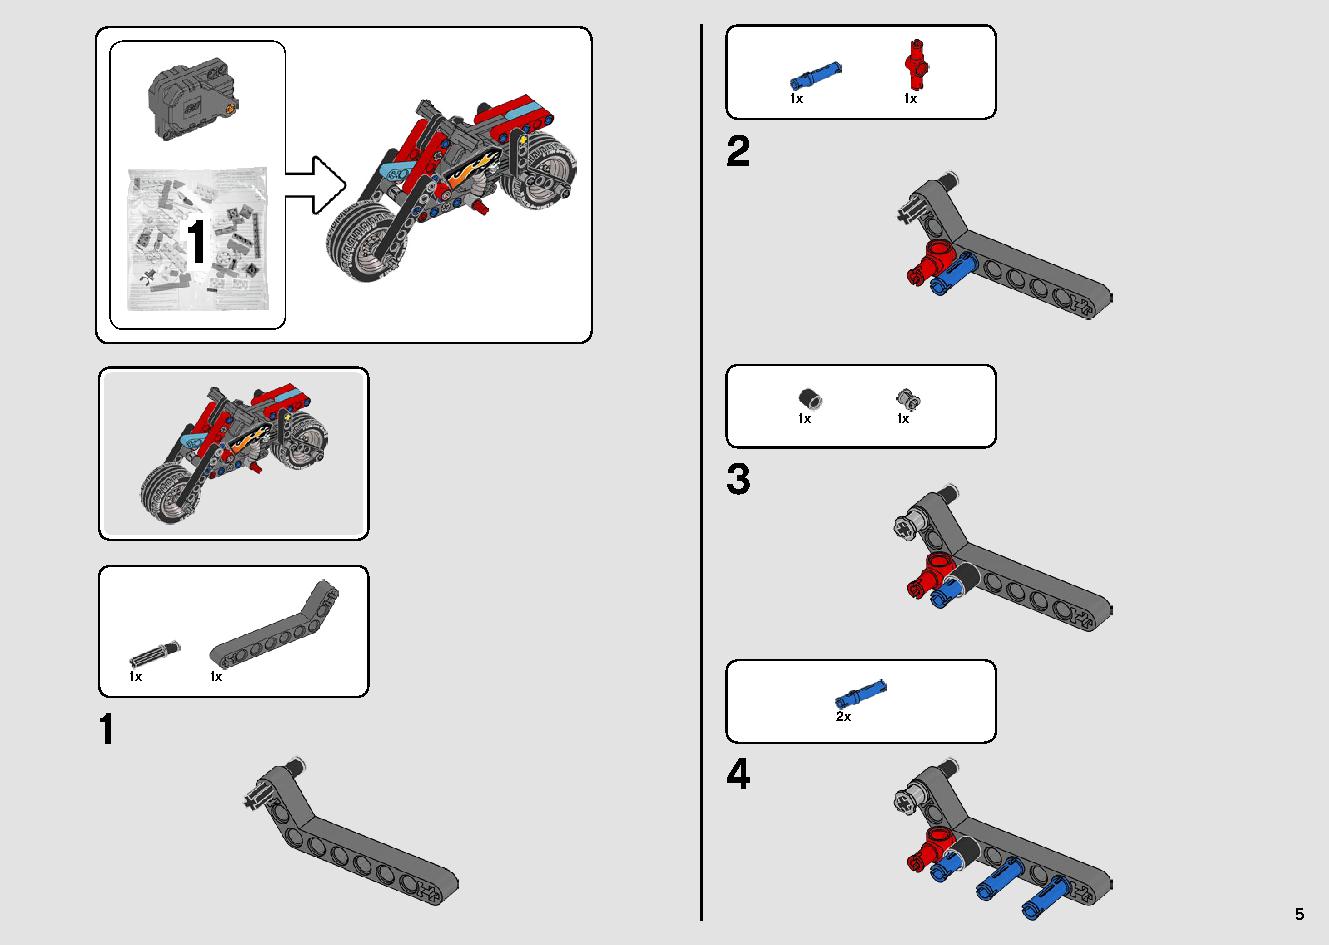 Stunt Show Truck & Bike 42106 LEGO information LEGO instructions 5 page